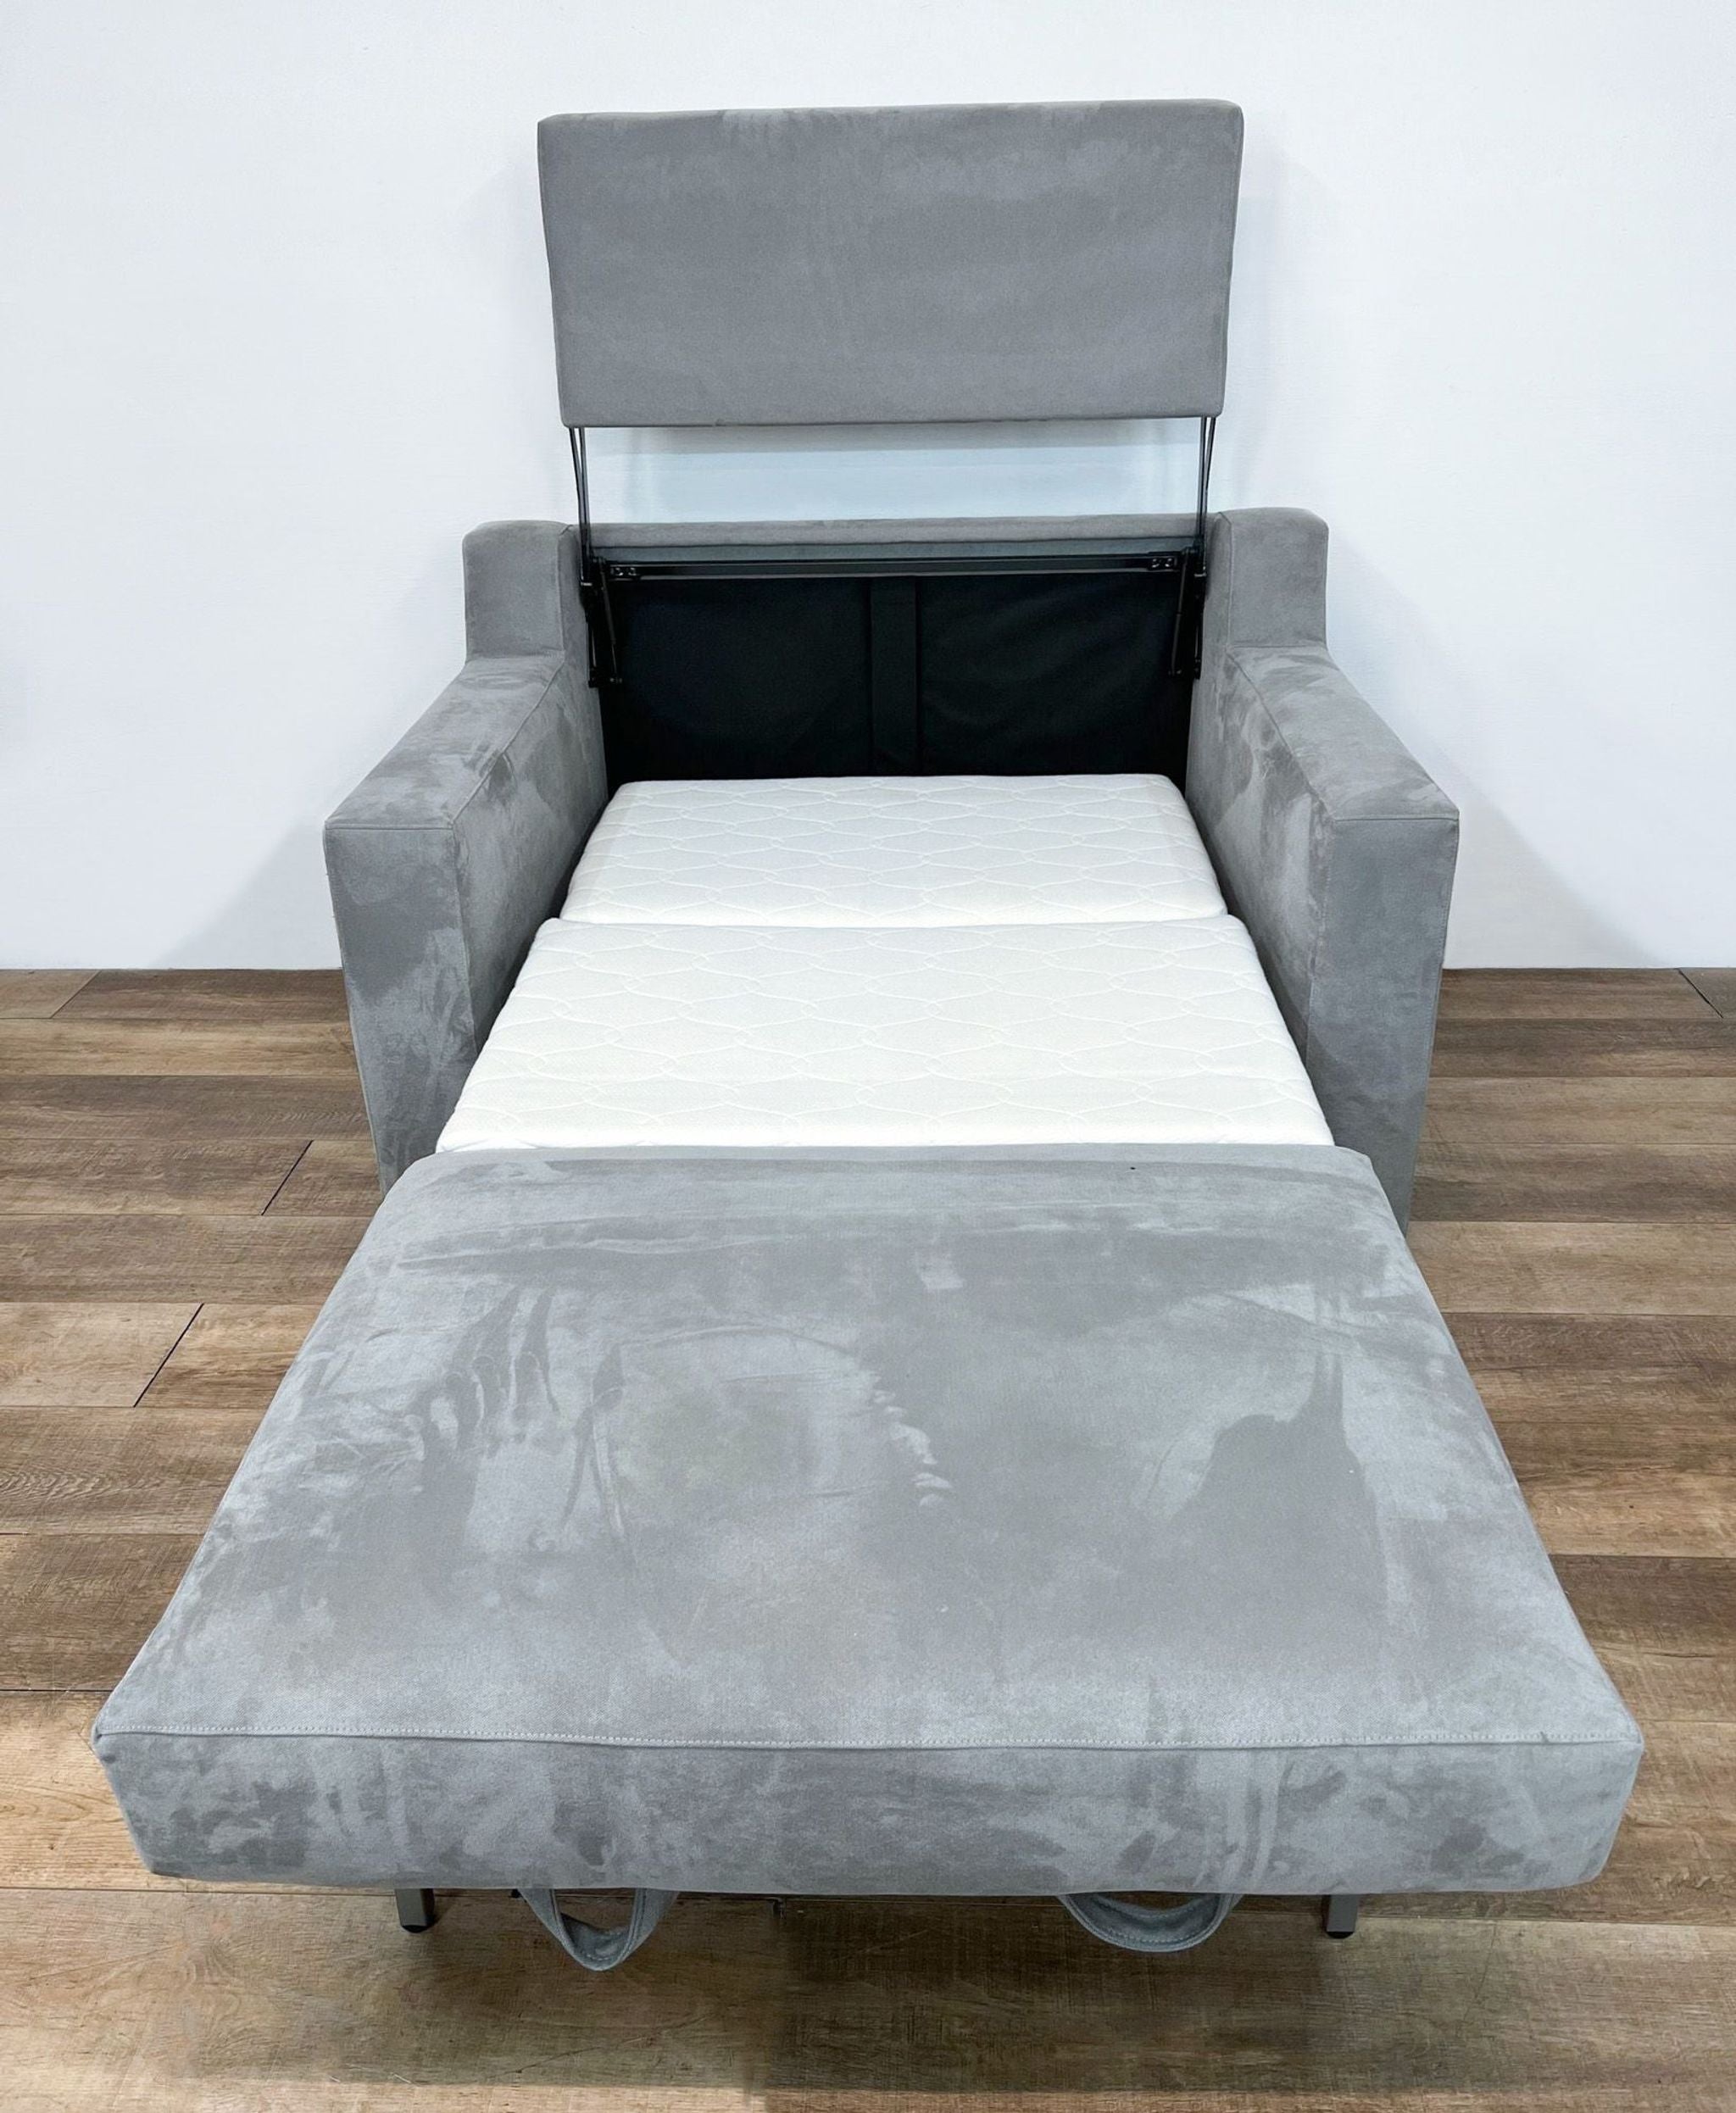 Crate & Barrel gray twin sleeper sofa open, showing fold-out memory foam mattress and adjustable headrest.